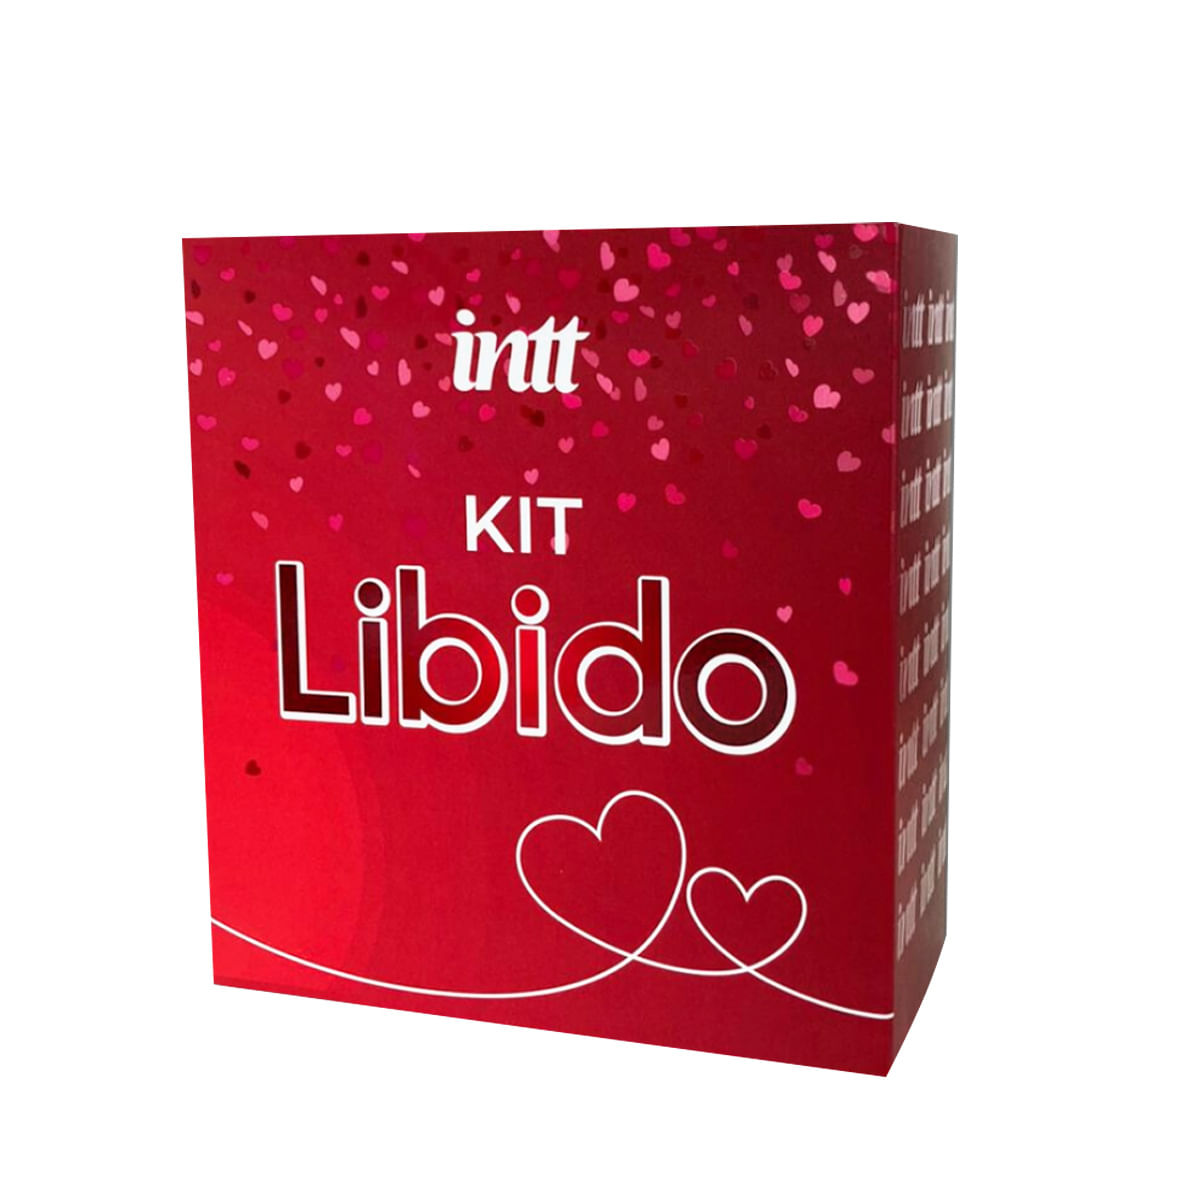 Kit Libido com 1 Excitation 17 ml e 1 Orgastic Intt